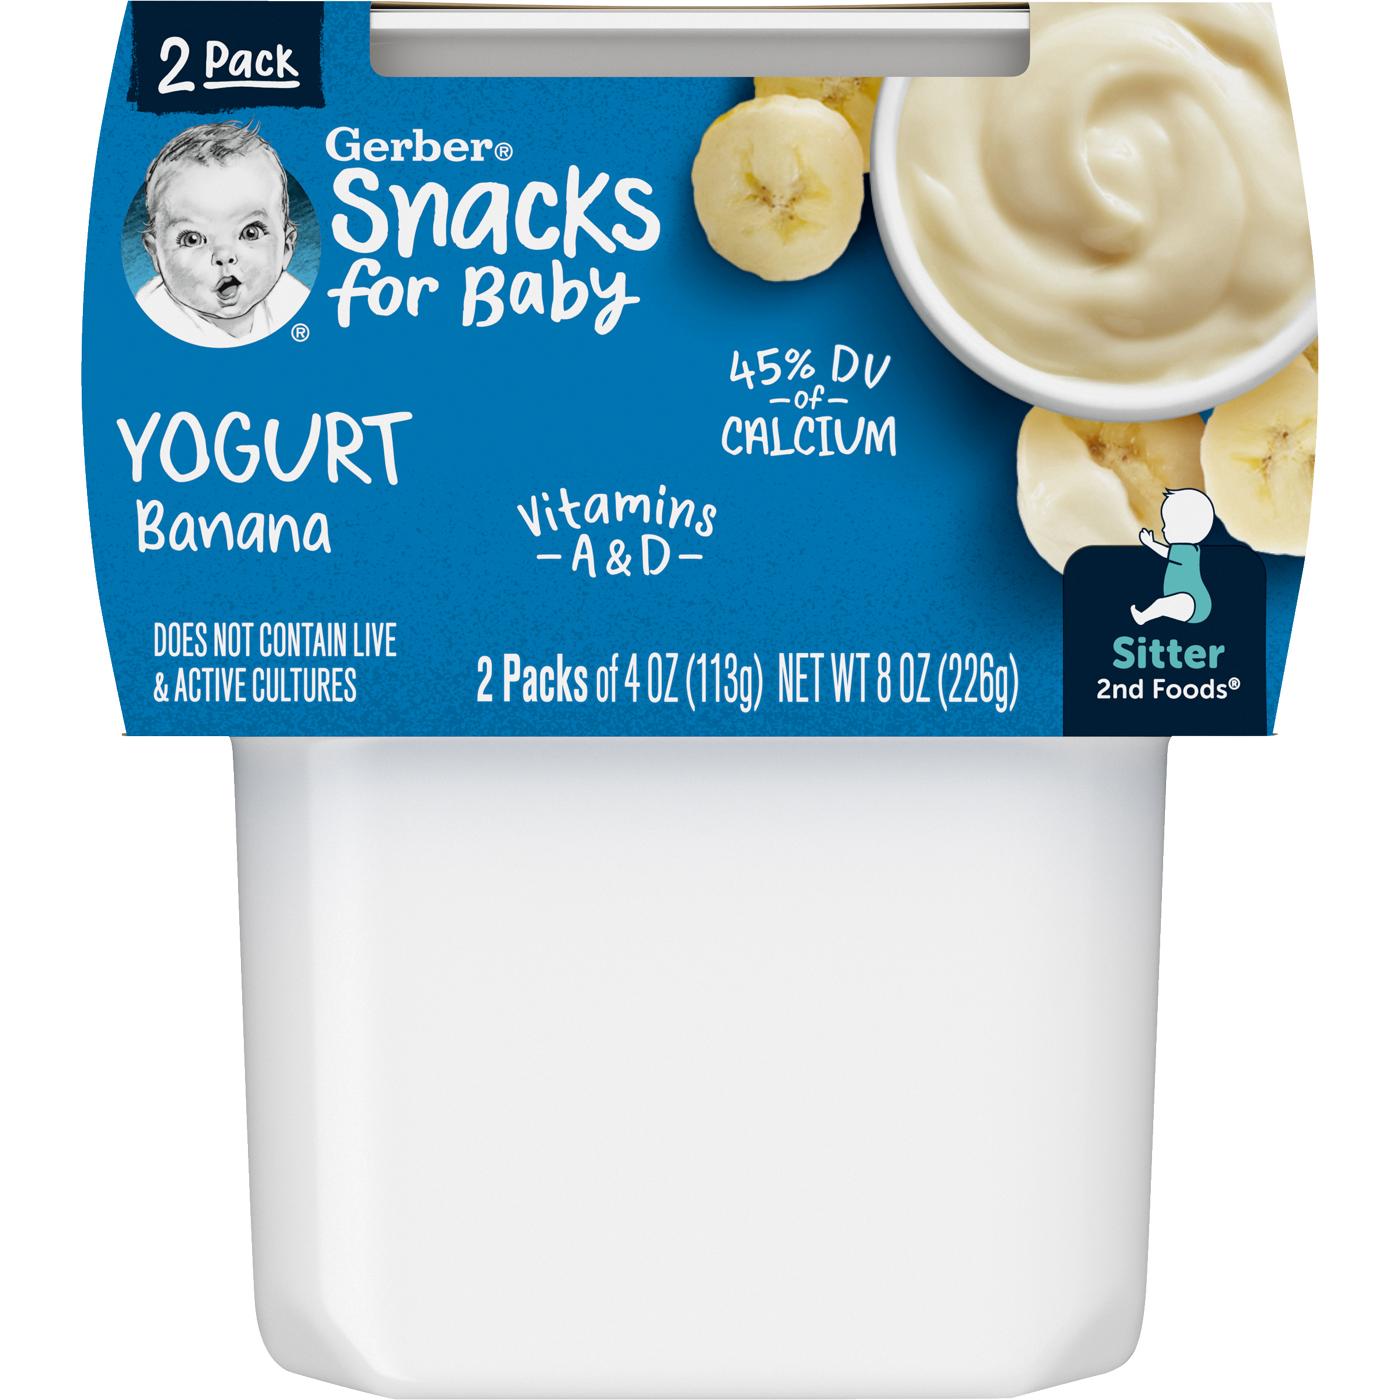 Gerber Snacks for Baby 2nd Foods - Banana Yogurt; image 1 of 3